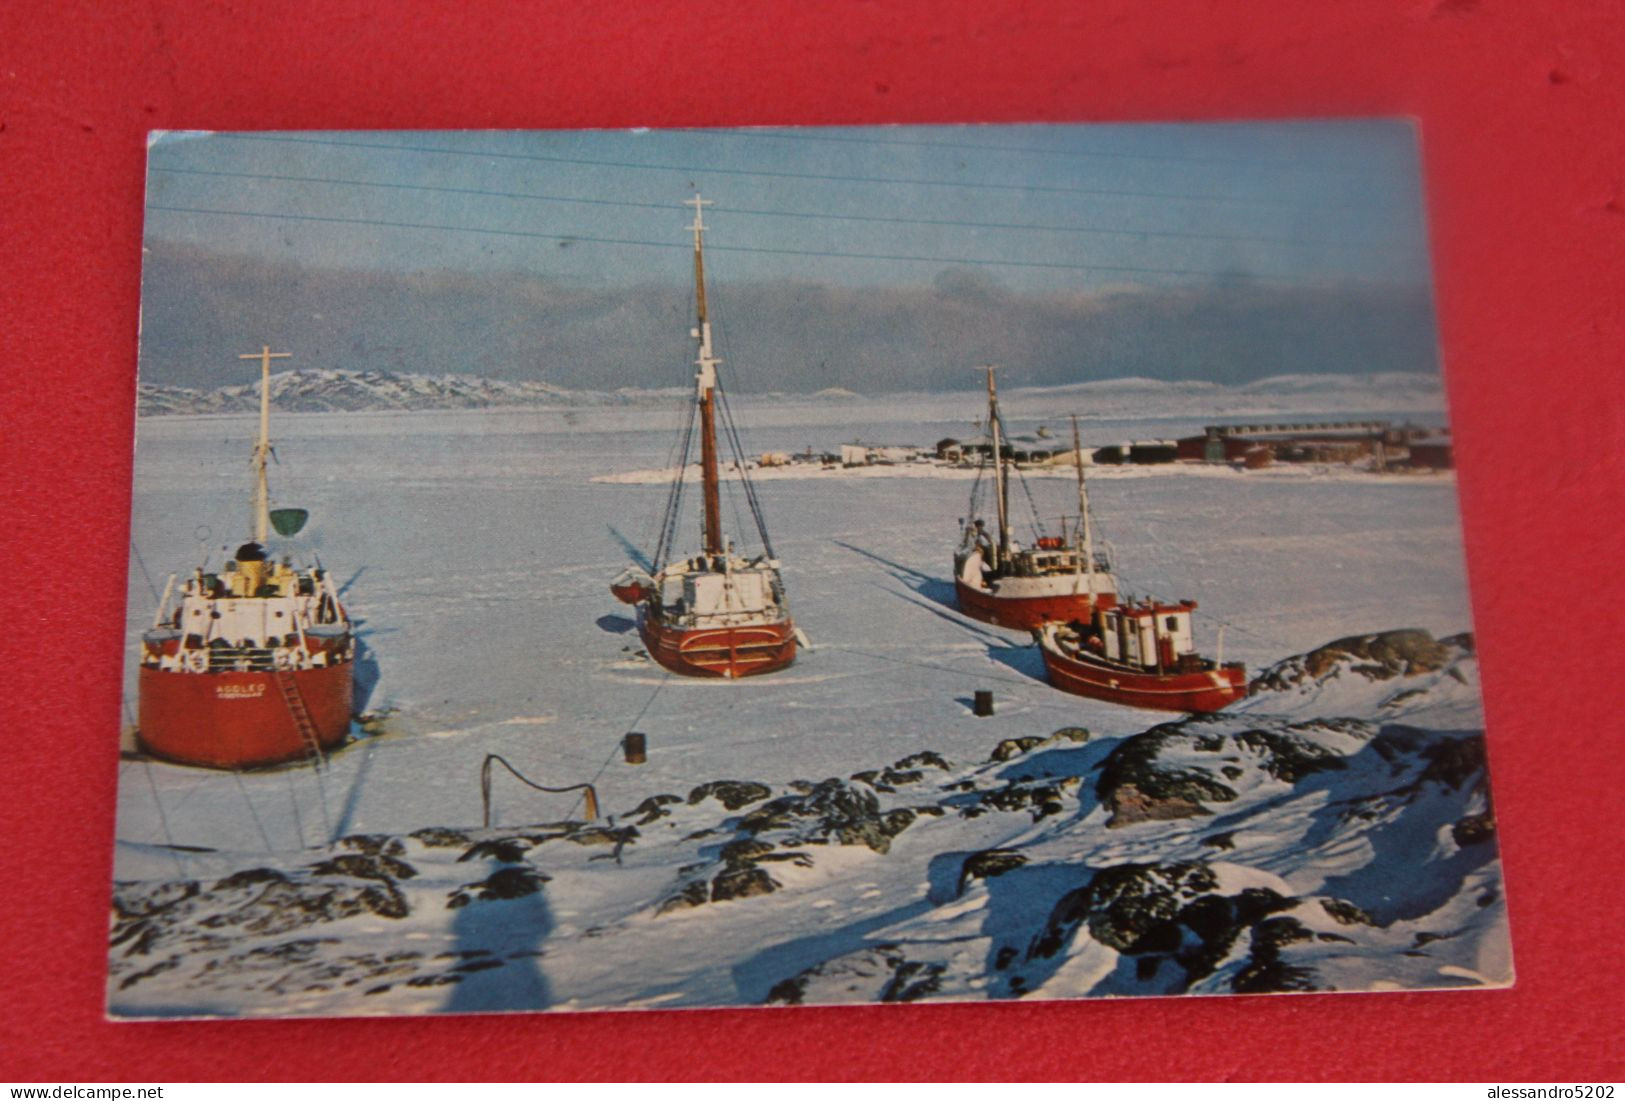 Gronland Greenland Egedesminde 1972 - Groenland